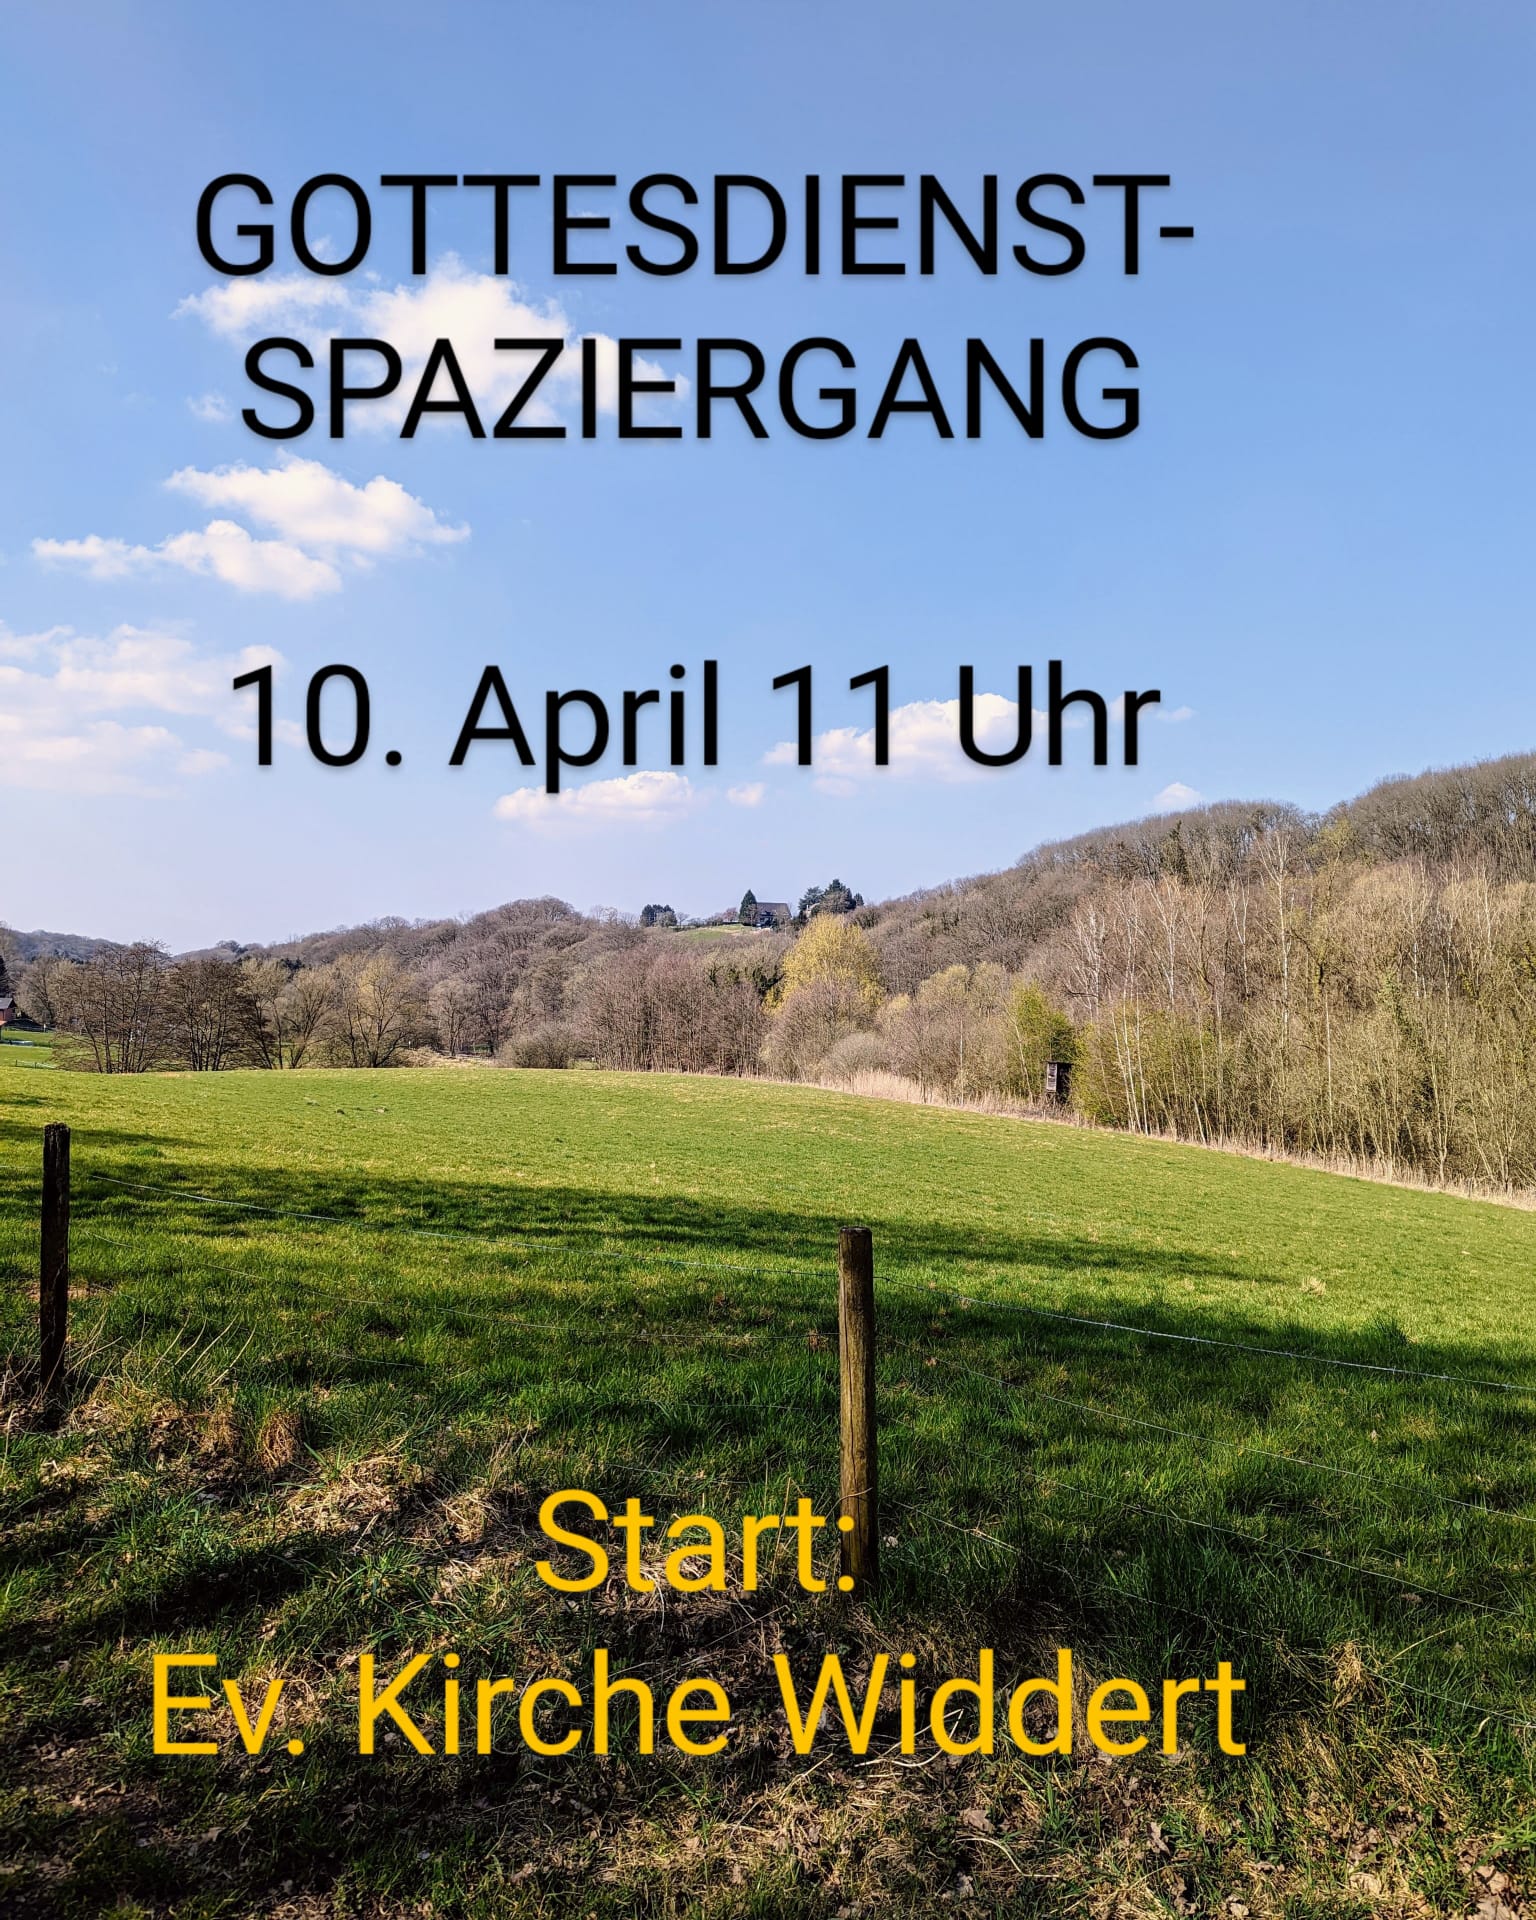 GOTTESDIENST-SPAZIERGANG 10. April 11 Uhr Start: Ev. Kirche Widdert